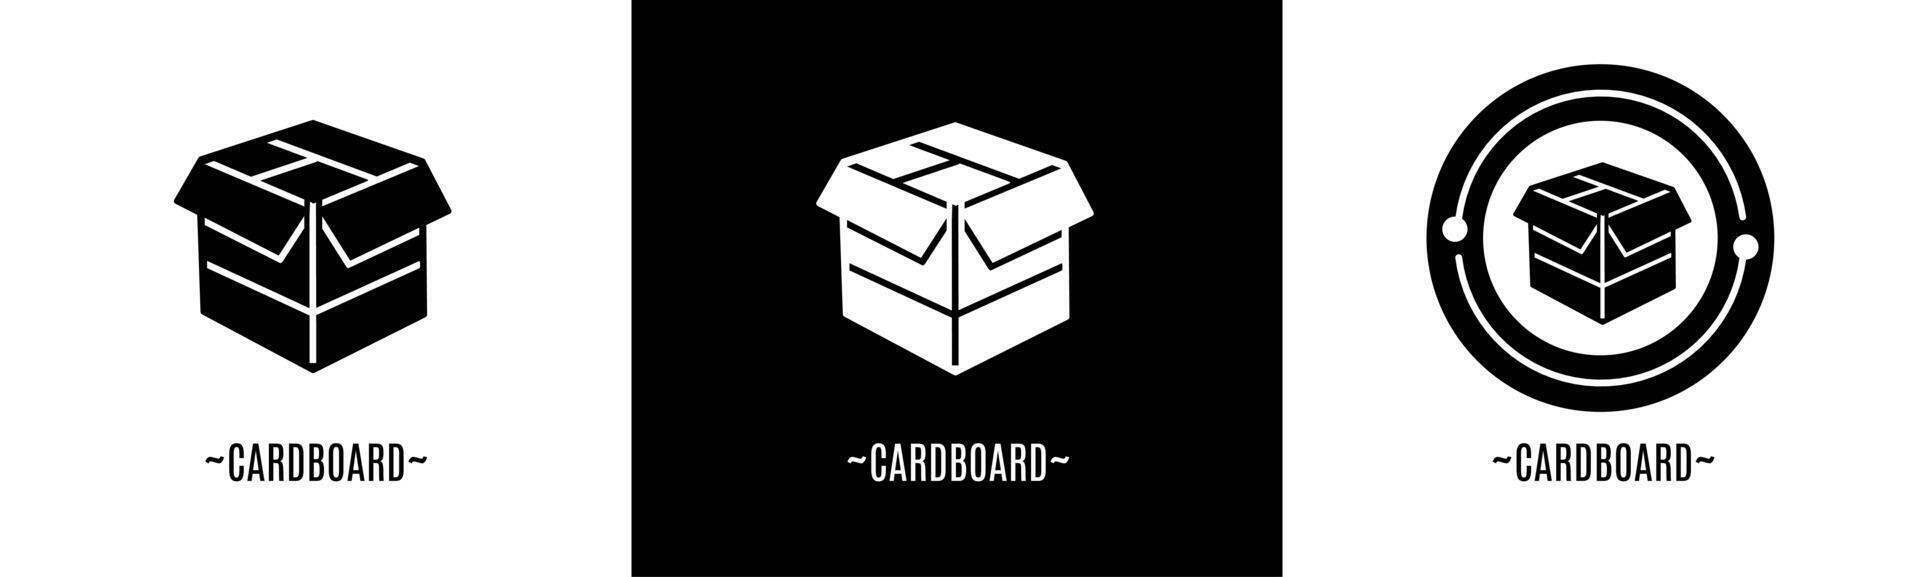 Cardboard logo set. Collection of black and white logos. Stock vector. vector